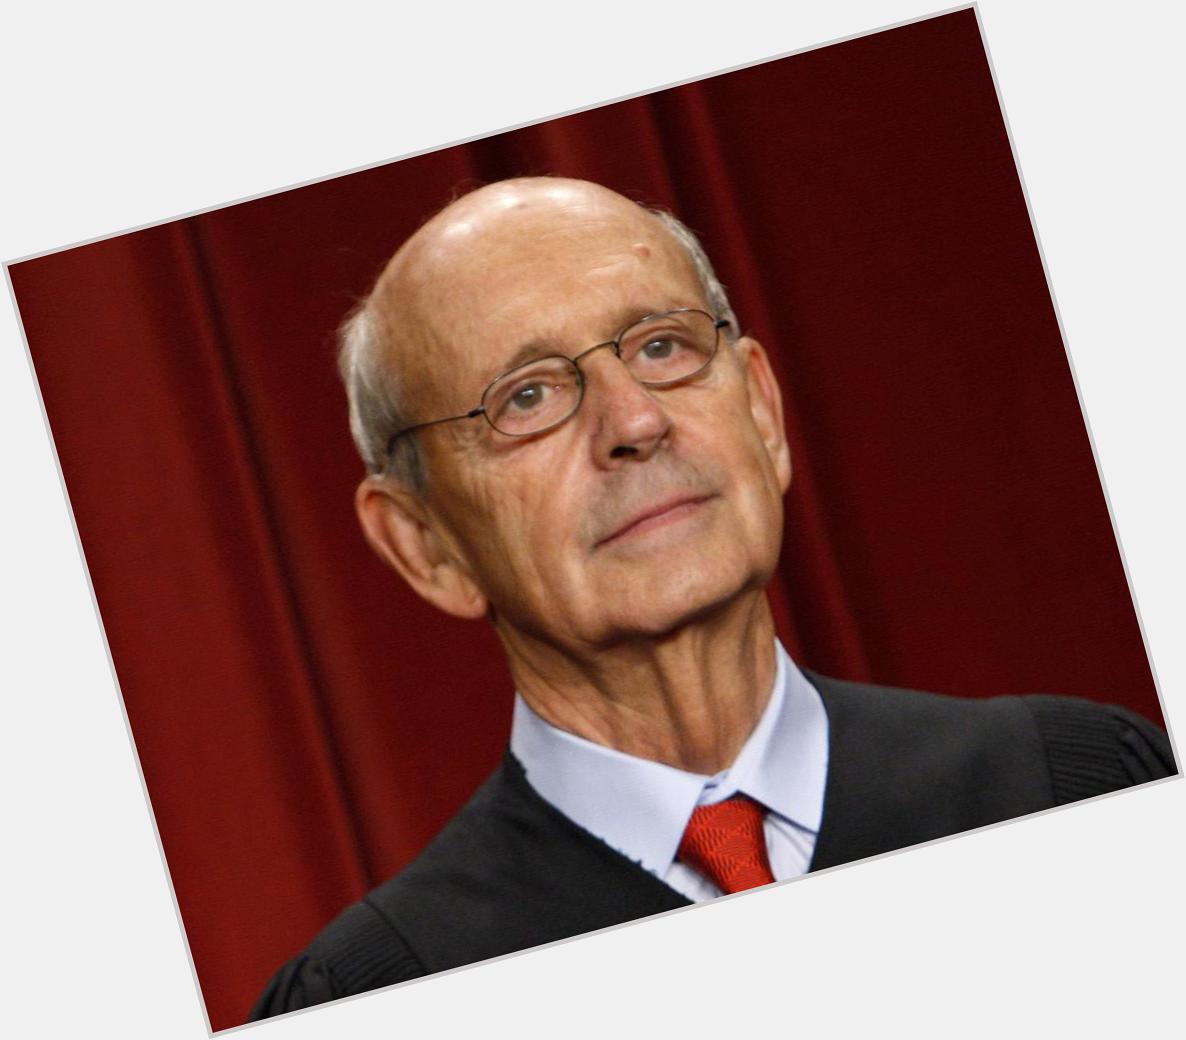 Wishing Justice Stephen Breyer a happy 77th birthday! 